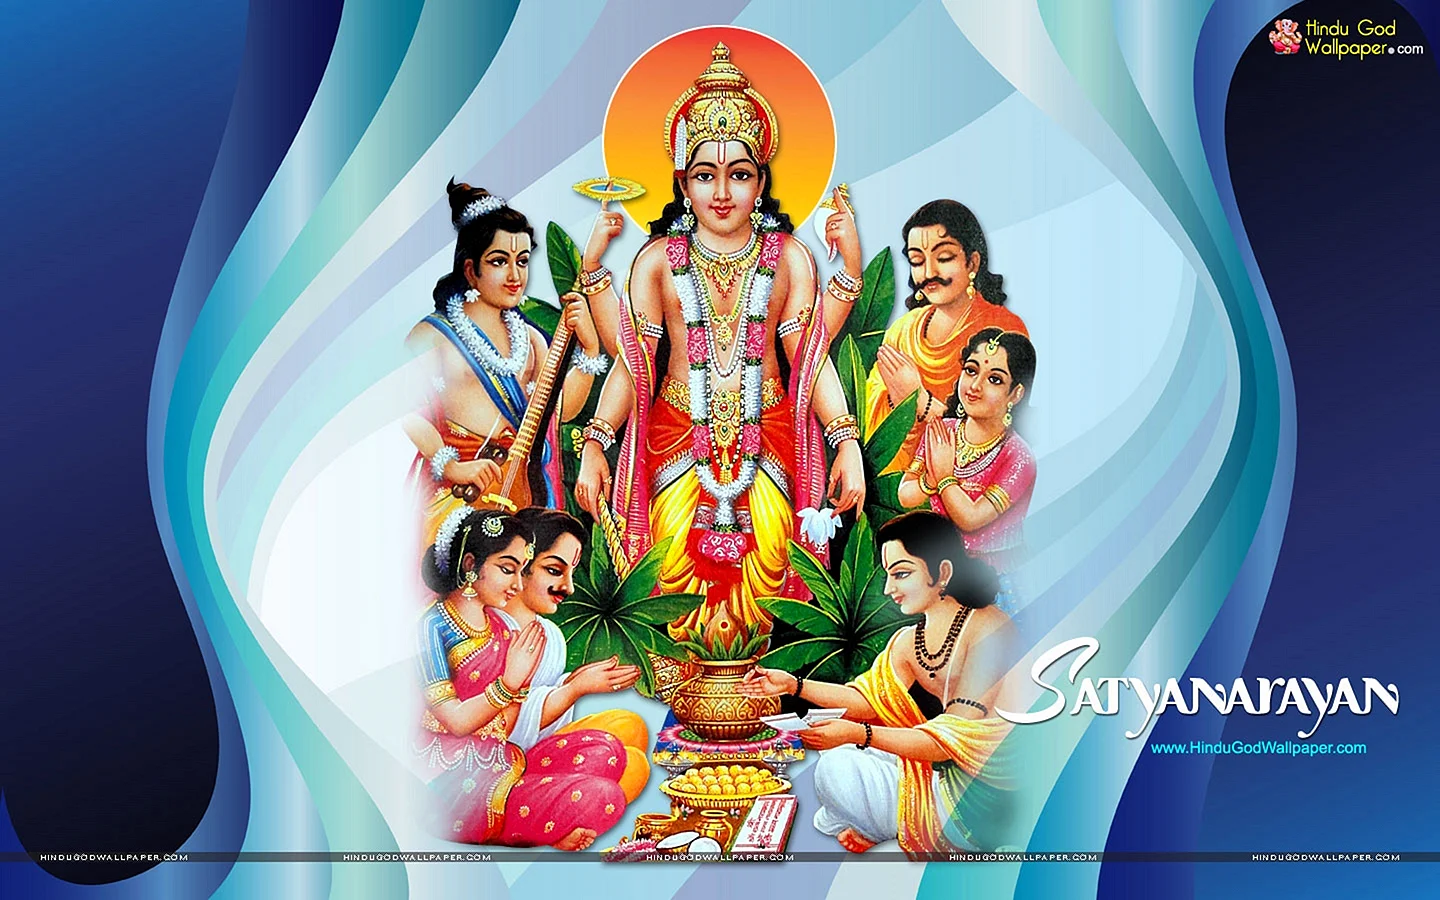 Satyanarayana Swamy Wallpaper